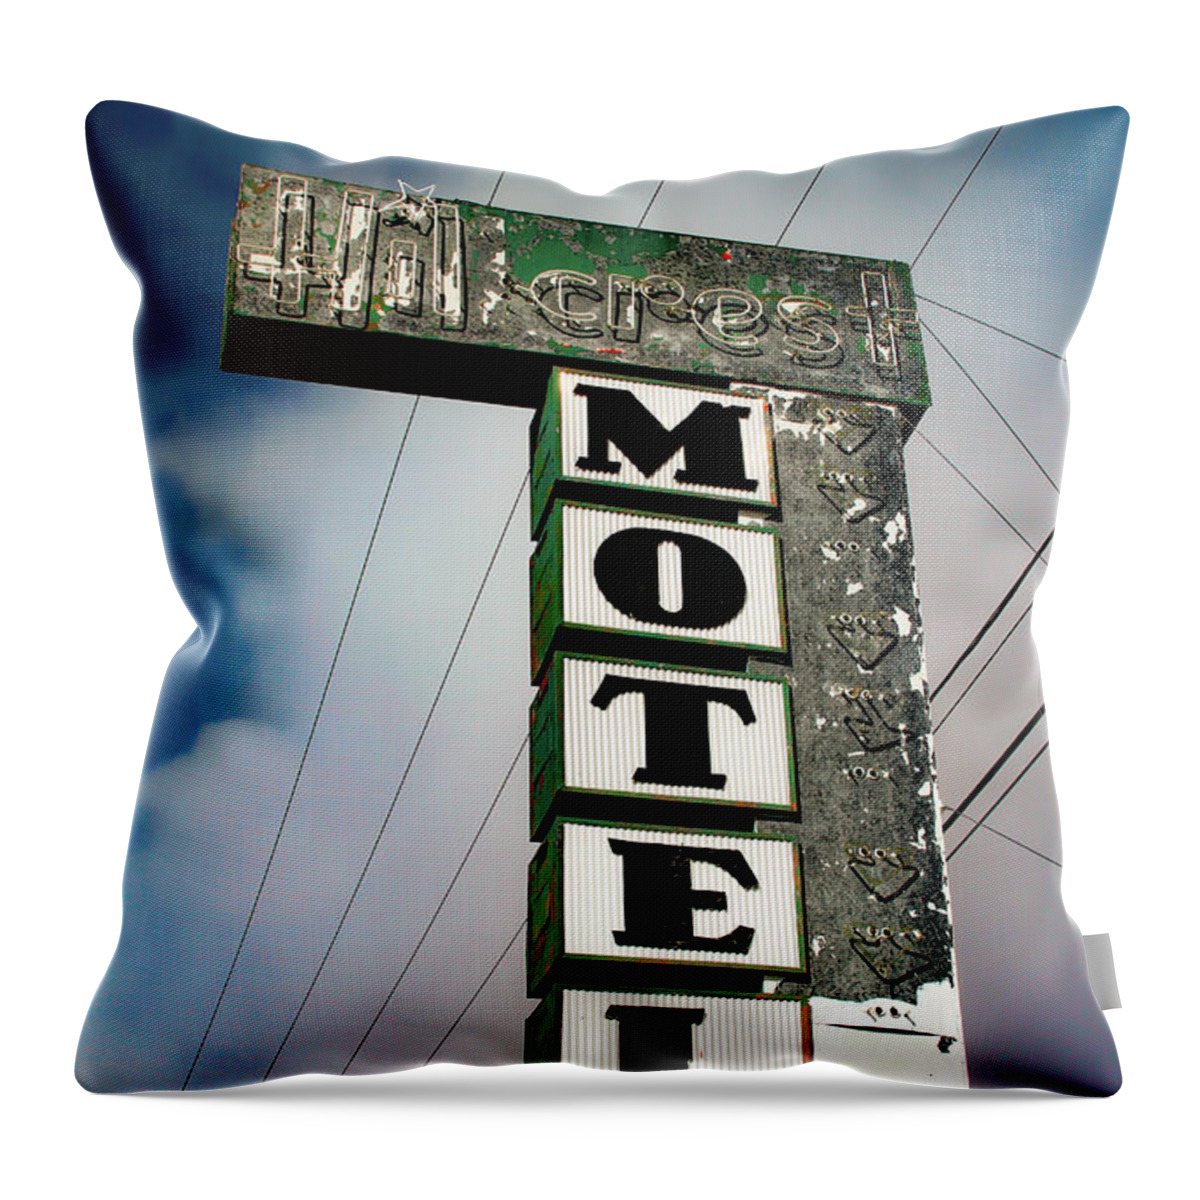 Hillcrest Motel Throw Pillow featuring the photograph Hillcrest Motel by Bonnie Follett